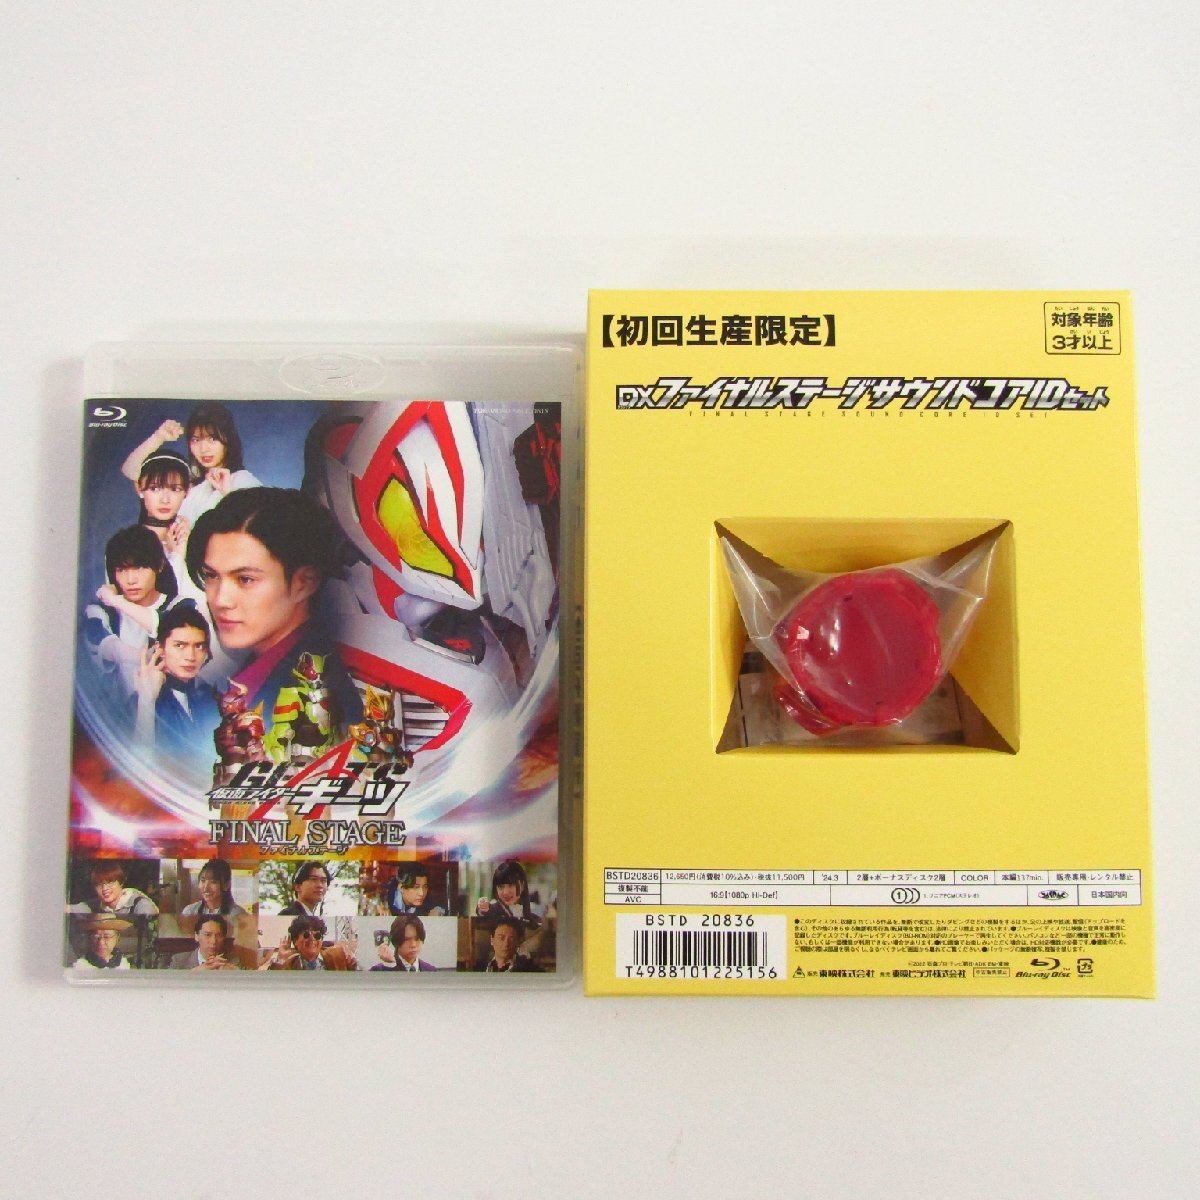  Kamen Rider gi-tsu Final Stage DX Final Stage звук core ID комплект версия первый раз производство ограничение Blu-ray =A1217